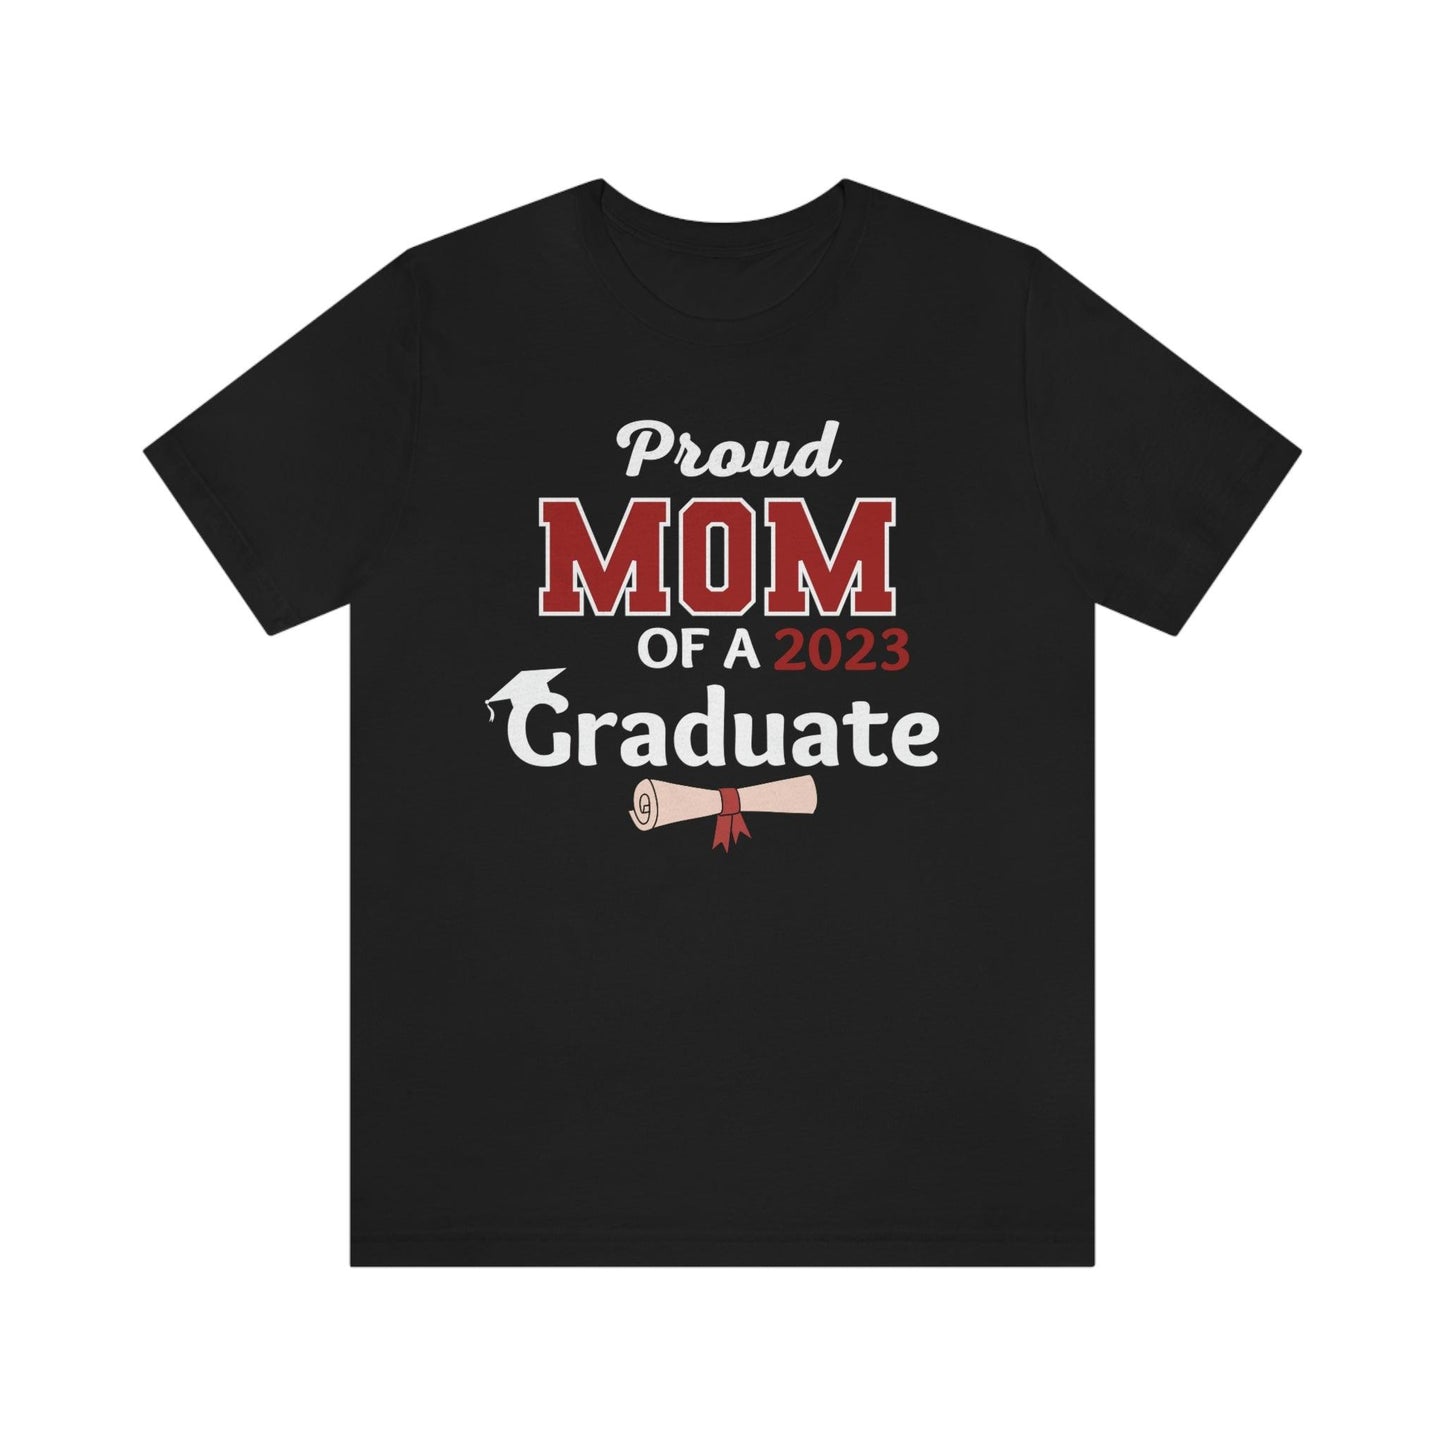 Proud mom of a Graduate shirt - Graduation shirt - Graduation gift